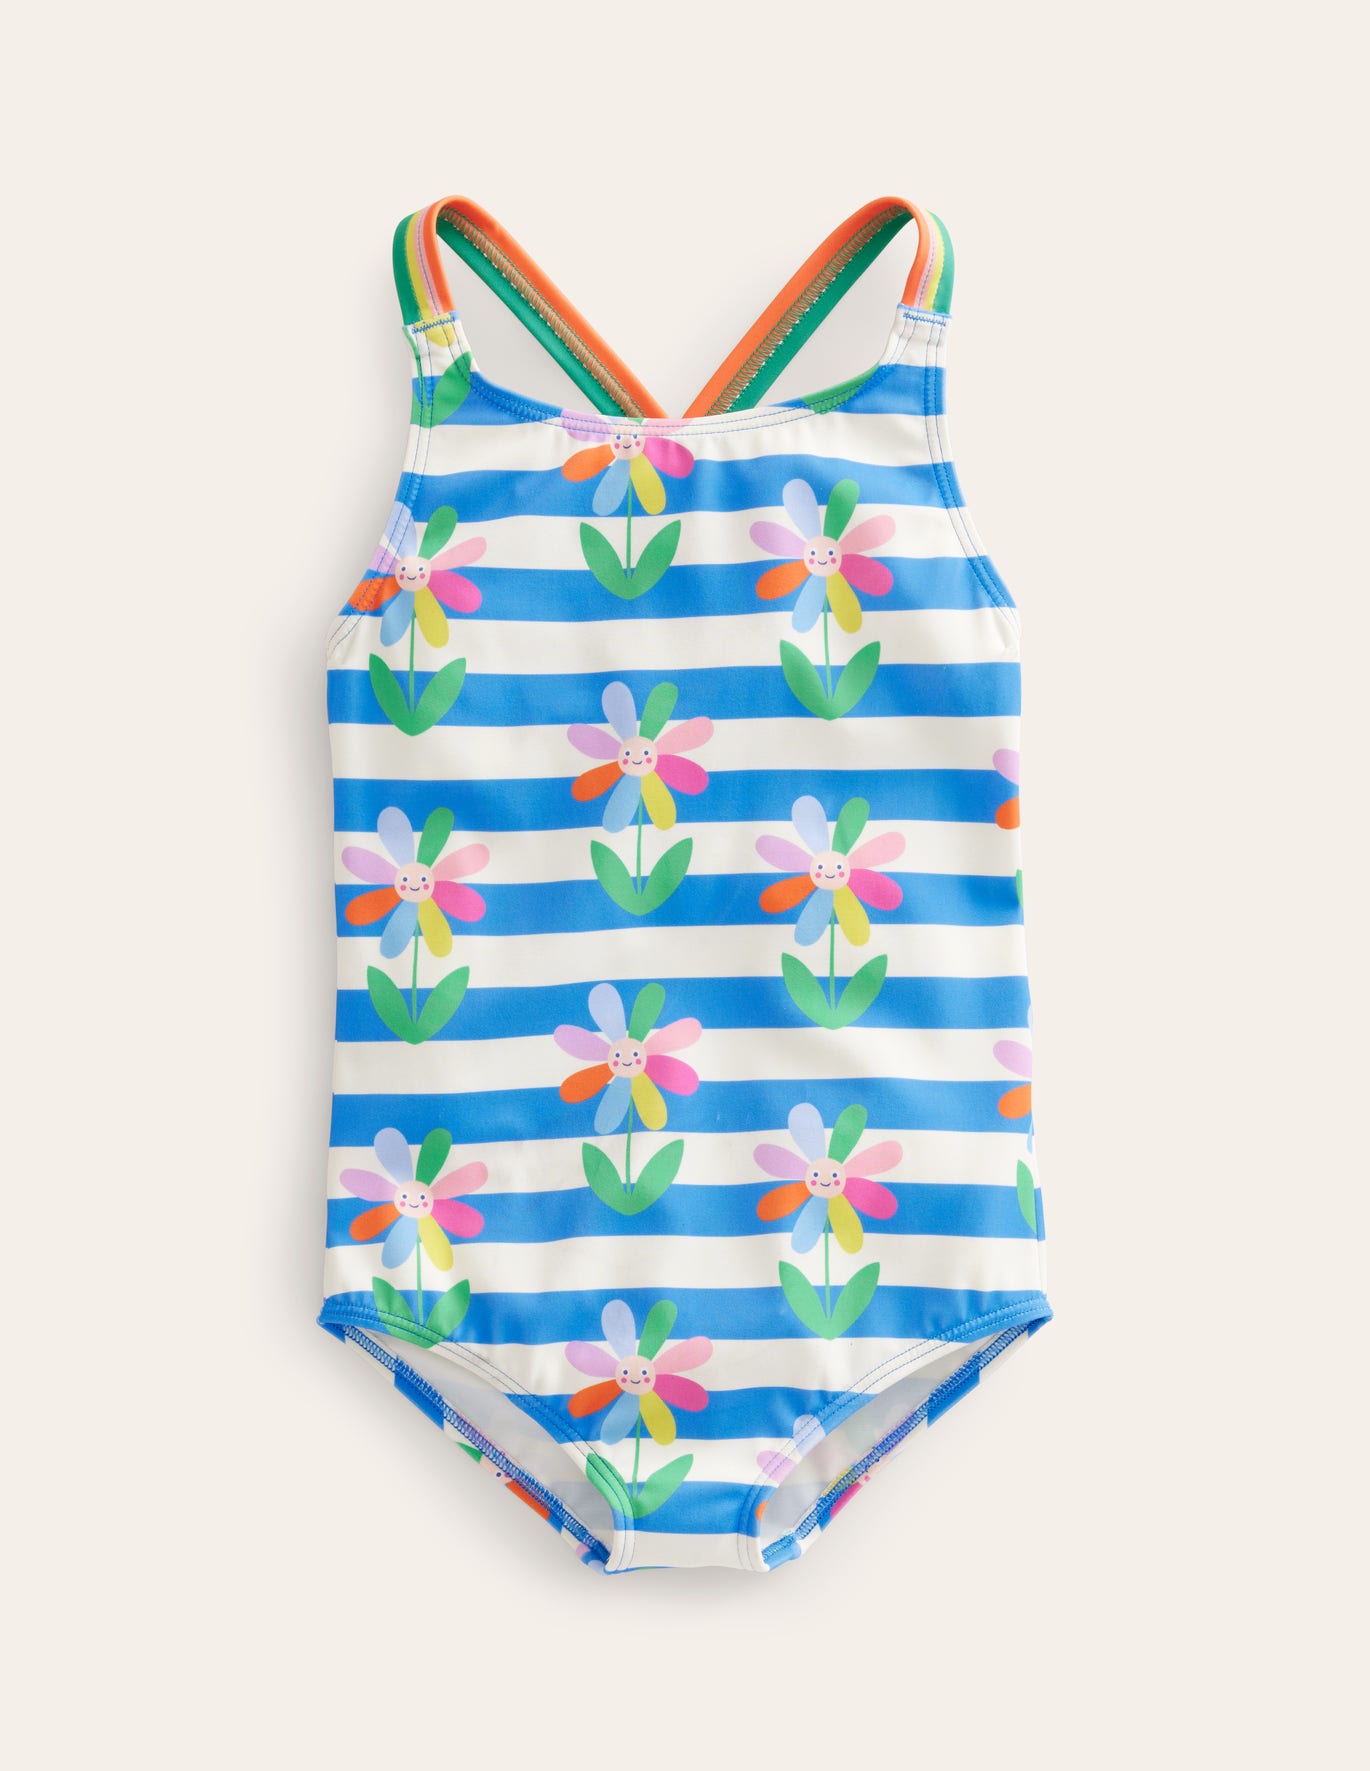 Boden Cross-back Printed Swimsuit - Cabana Blue Daisy Stripe